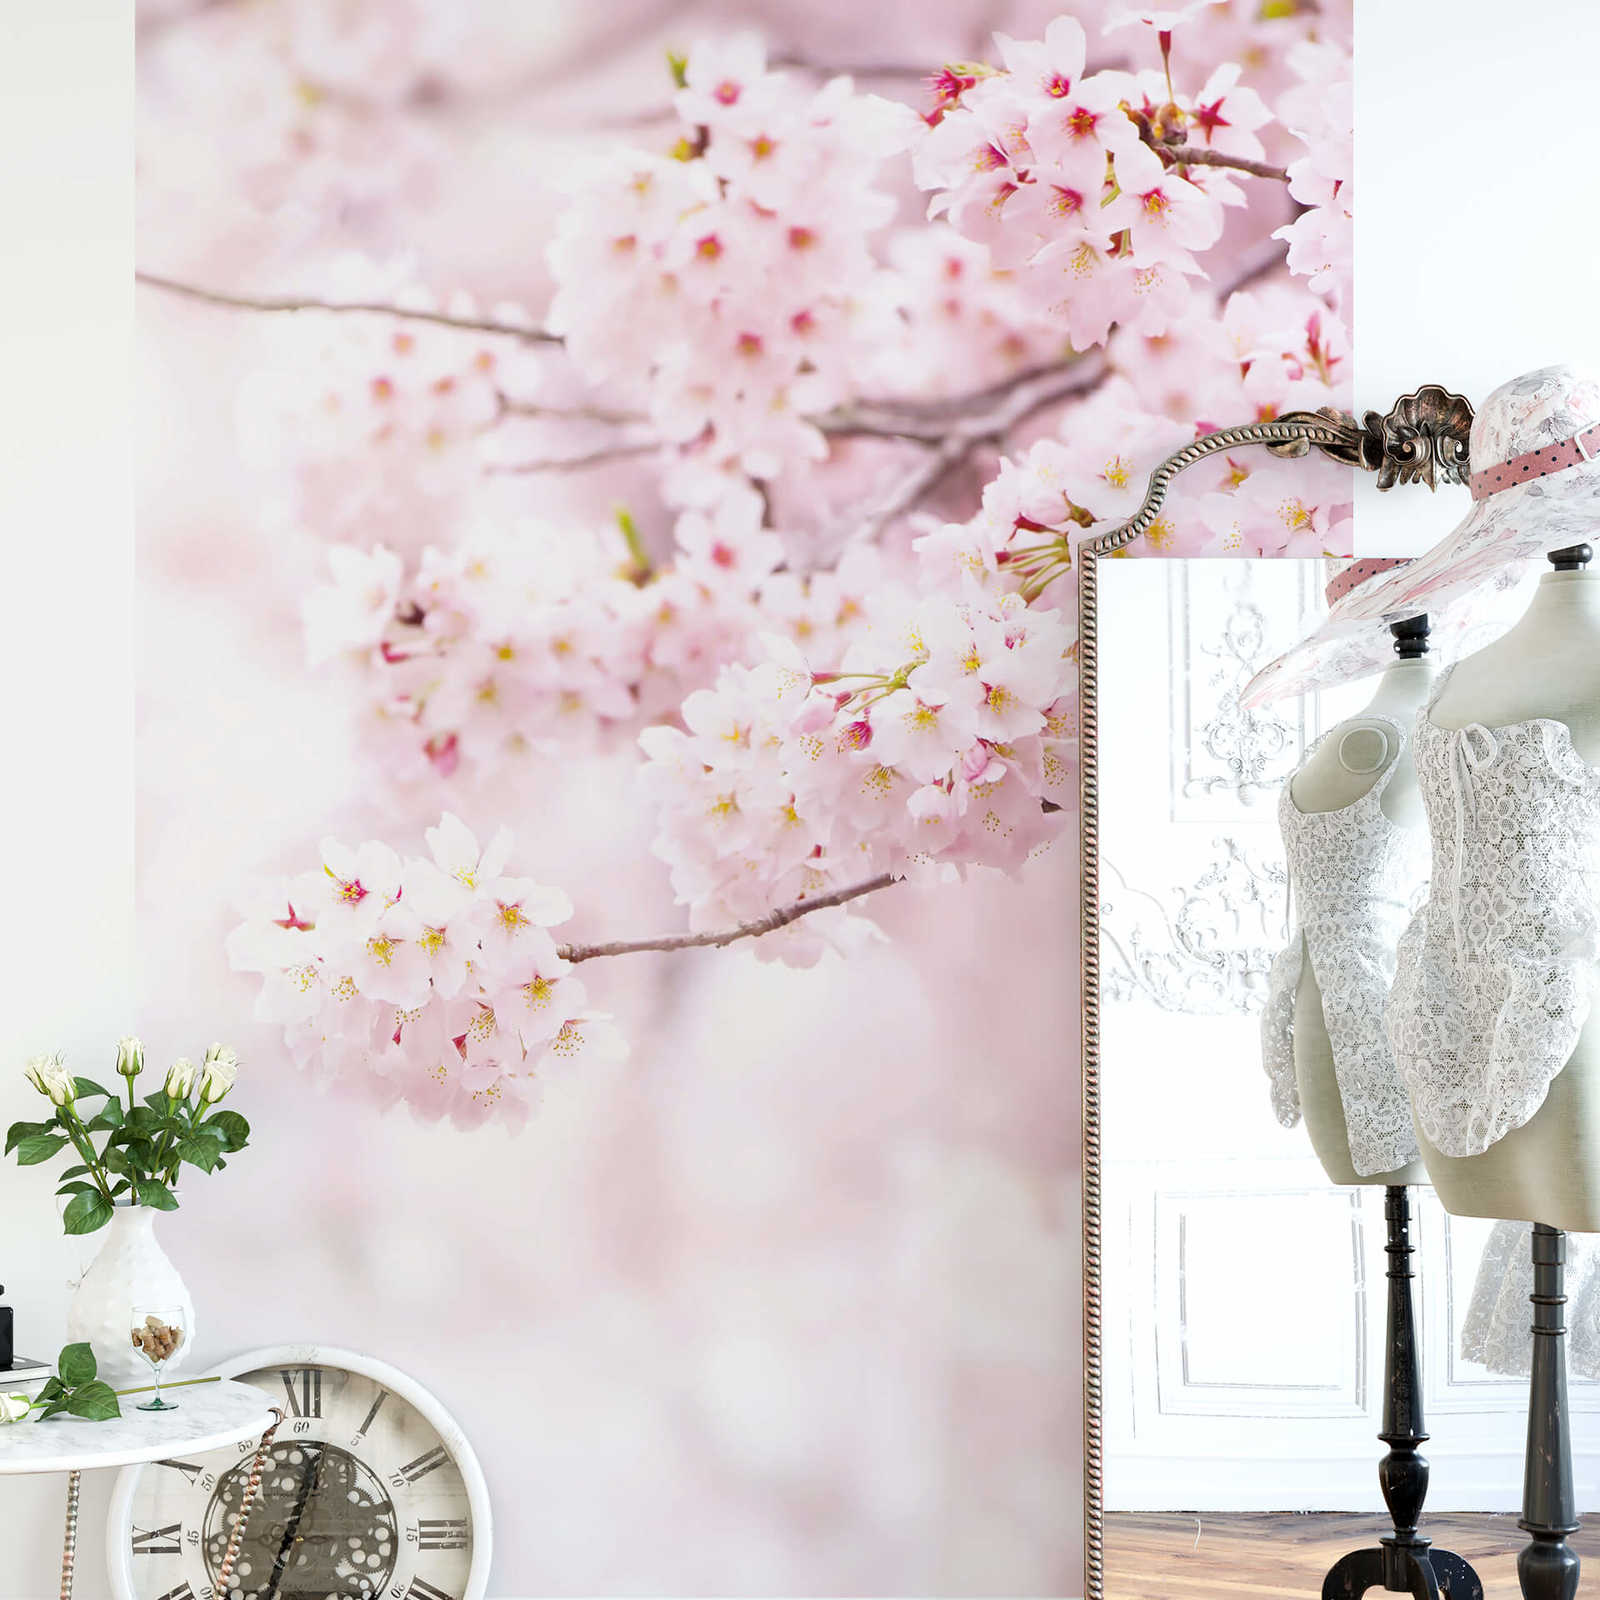             Photo wallpaper narrow spring flowers - pink, white
        